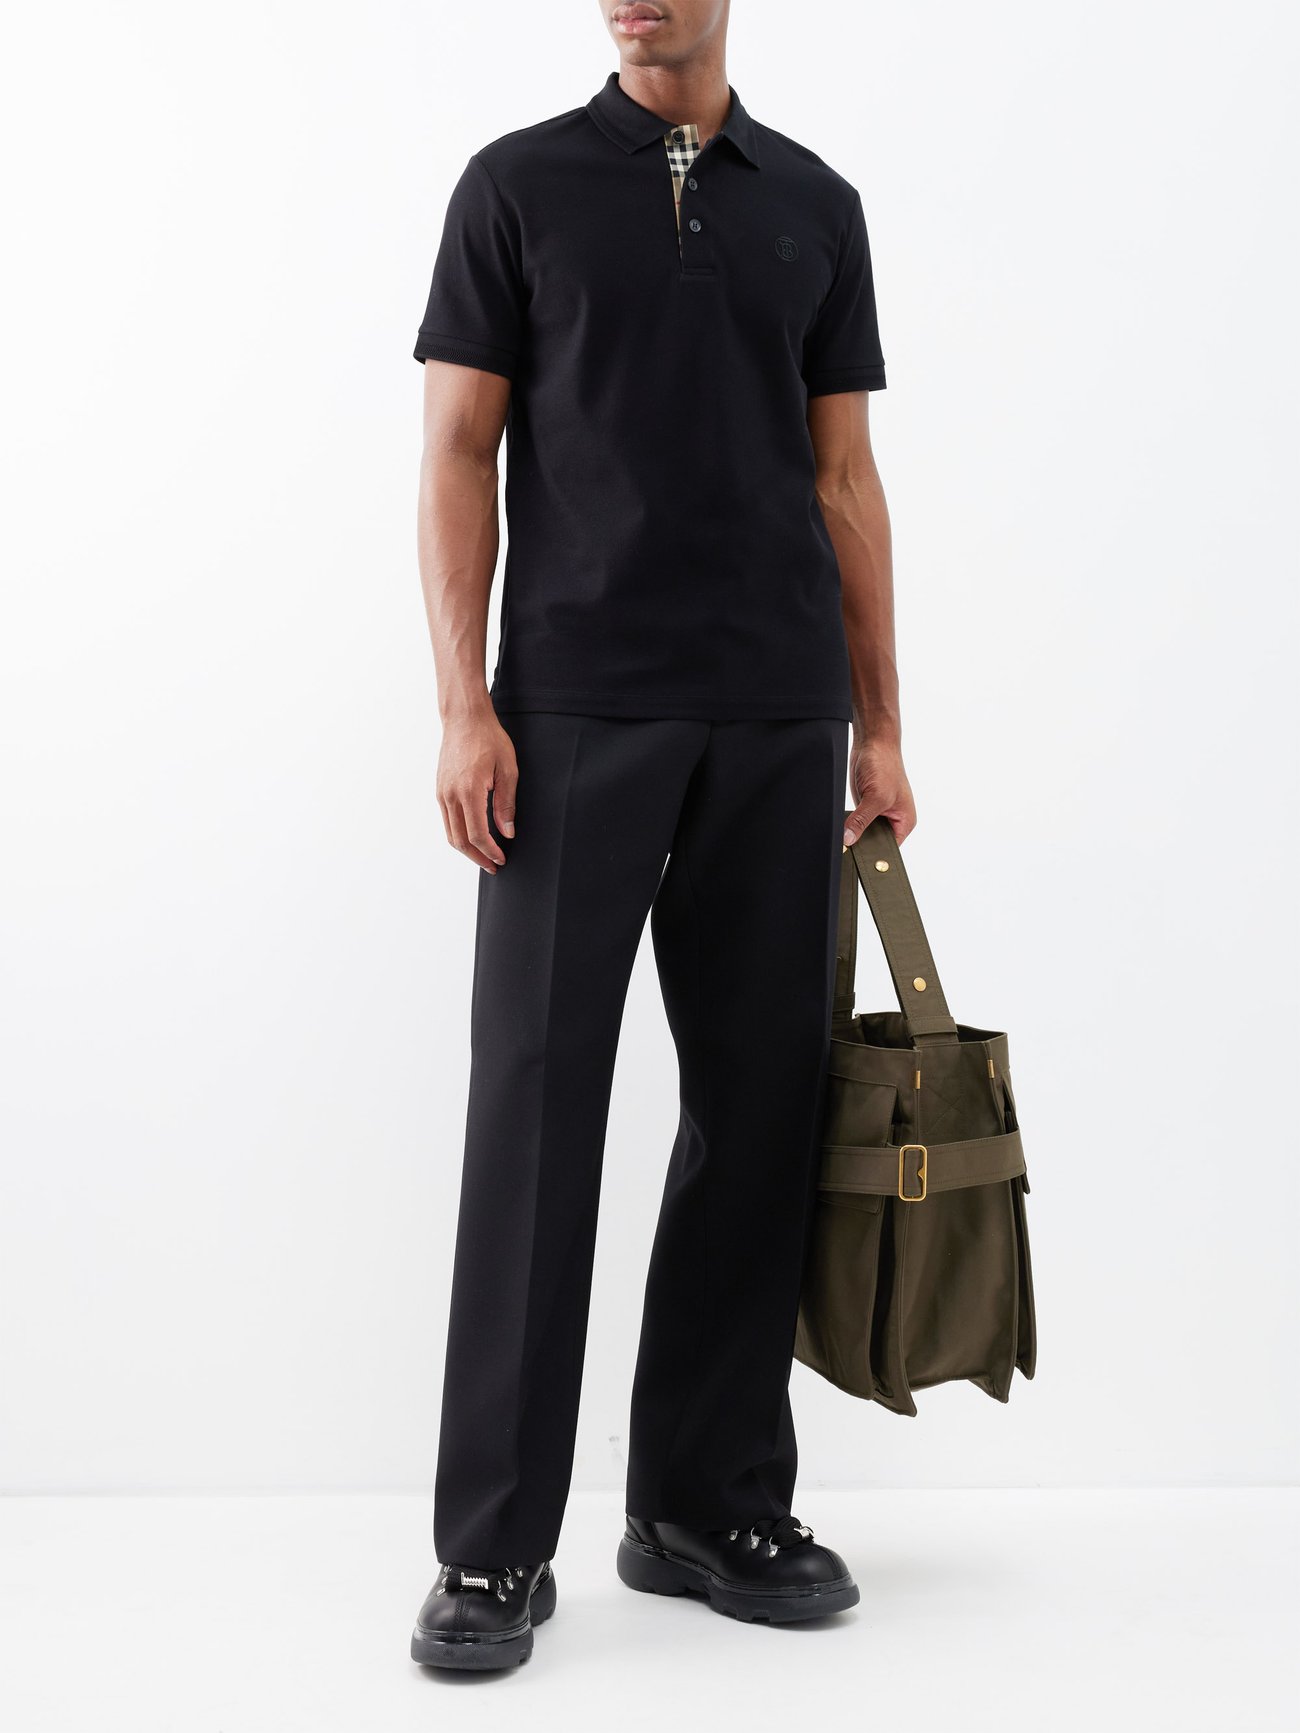 Burberry Men's Eddie Piqué Polo Shirt - Black - Size Small